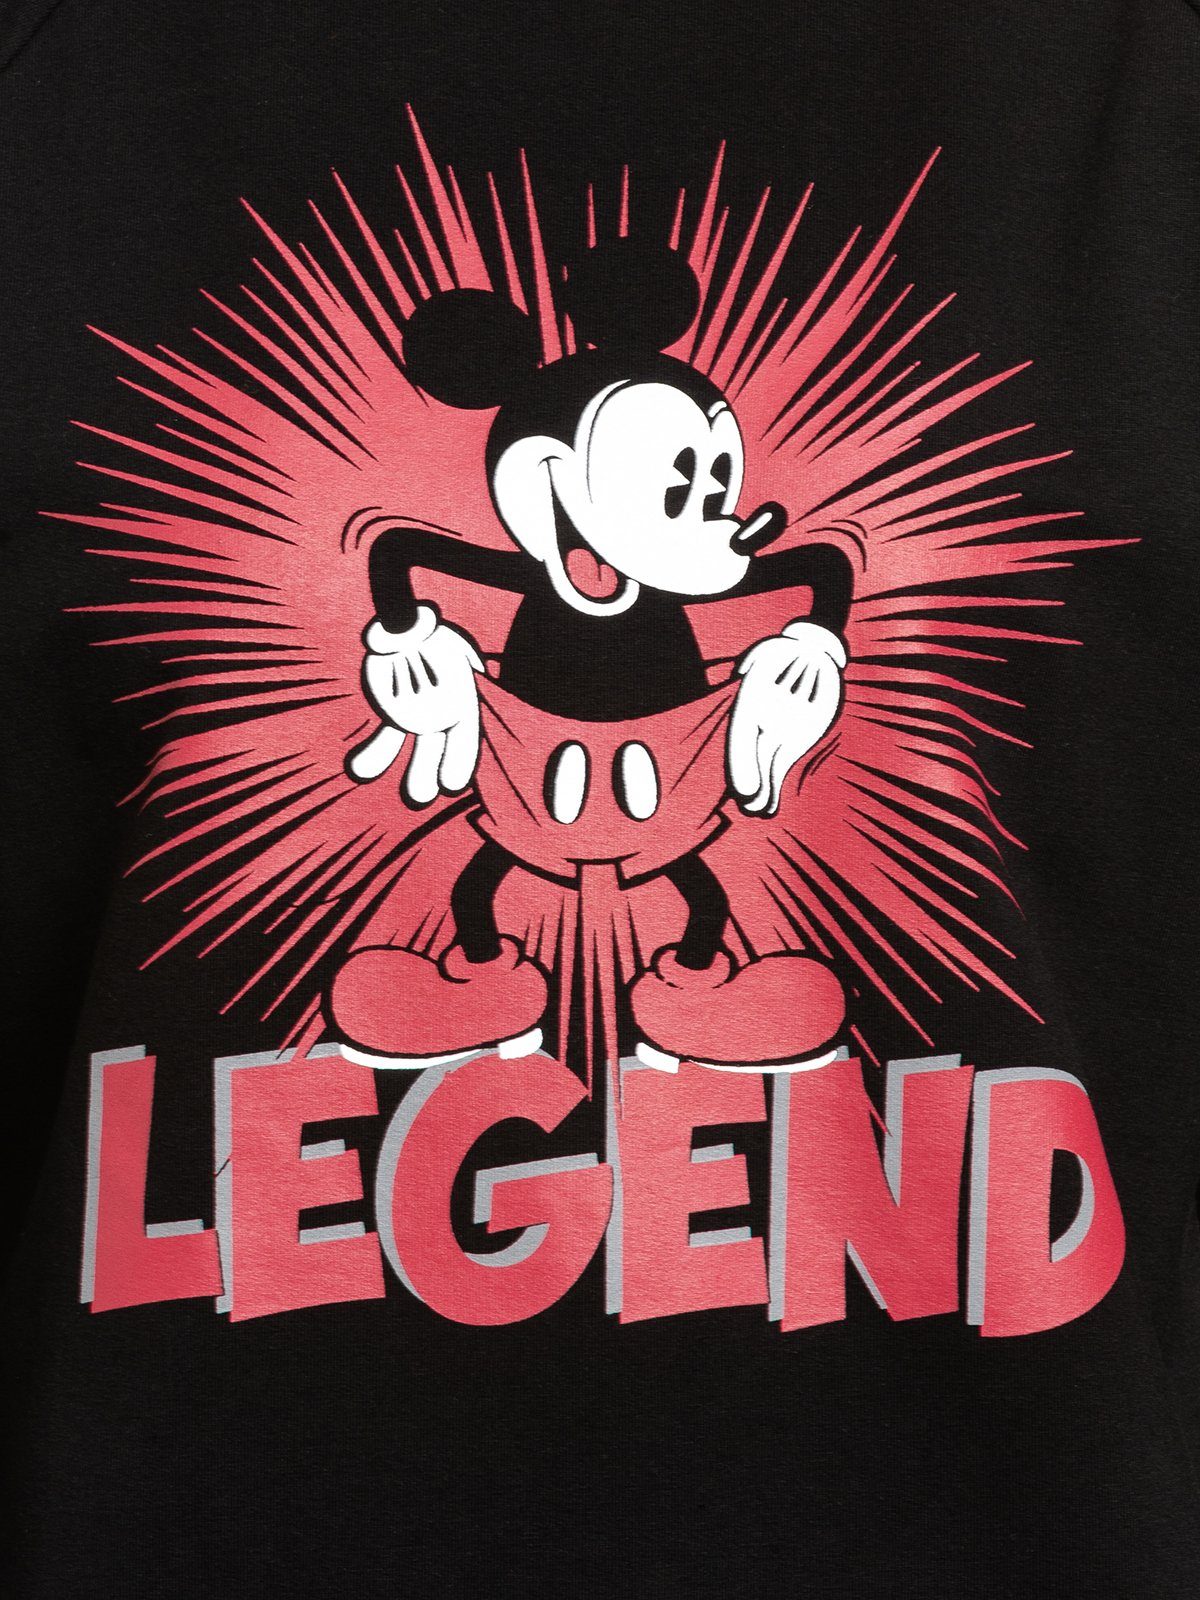 Damen Pullover Disney Sweatshirt Mickey & Minnie Mouse Mickey Mouse Legend